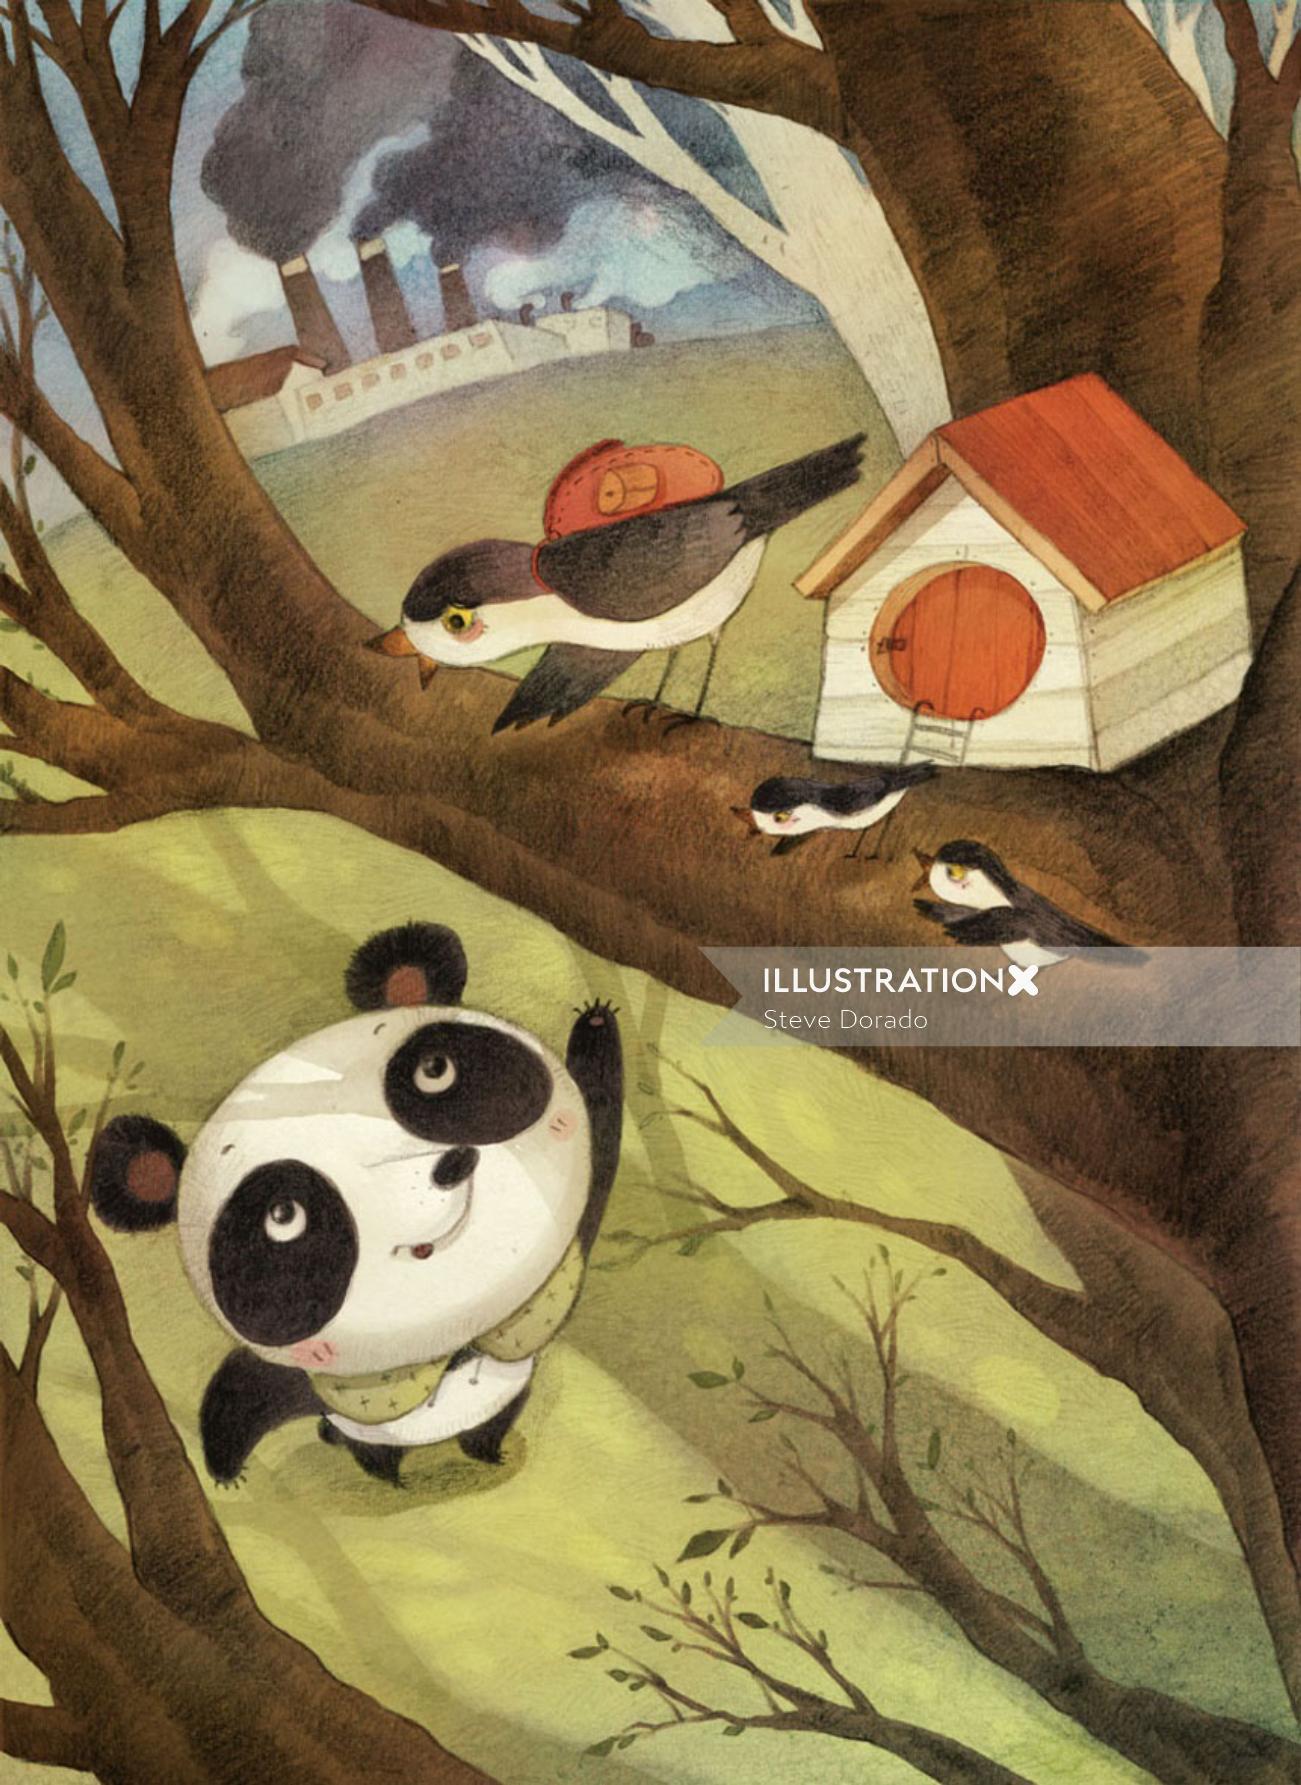 Oso panda de dibujos animados llamando pájaros sentado en un árbol alto